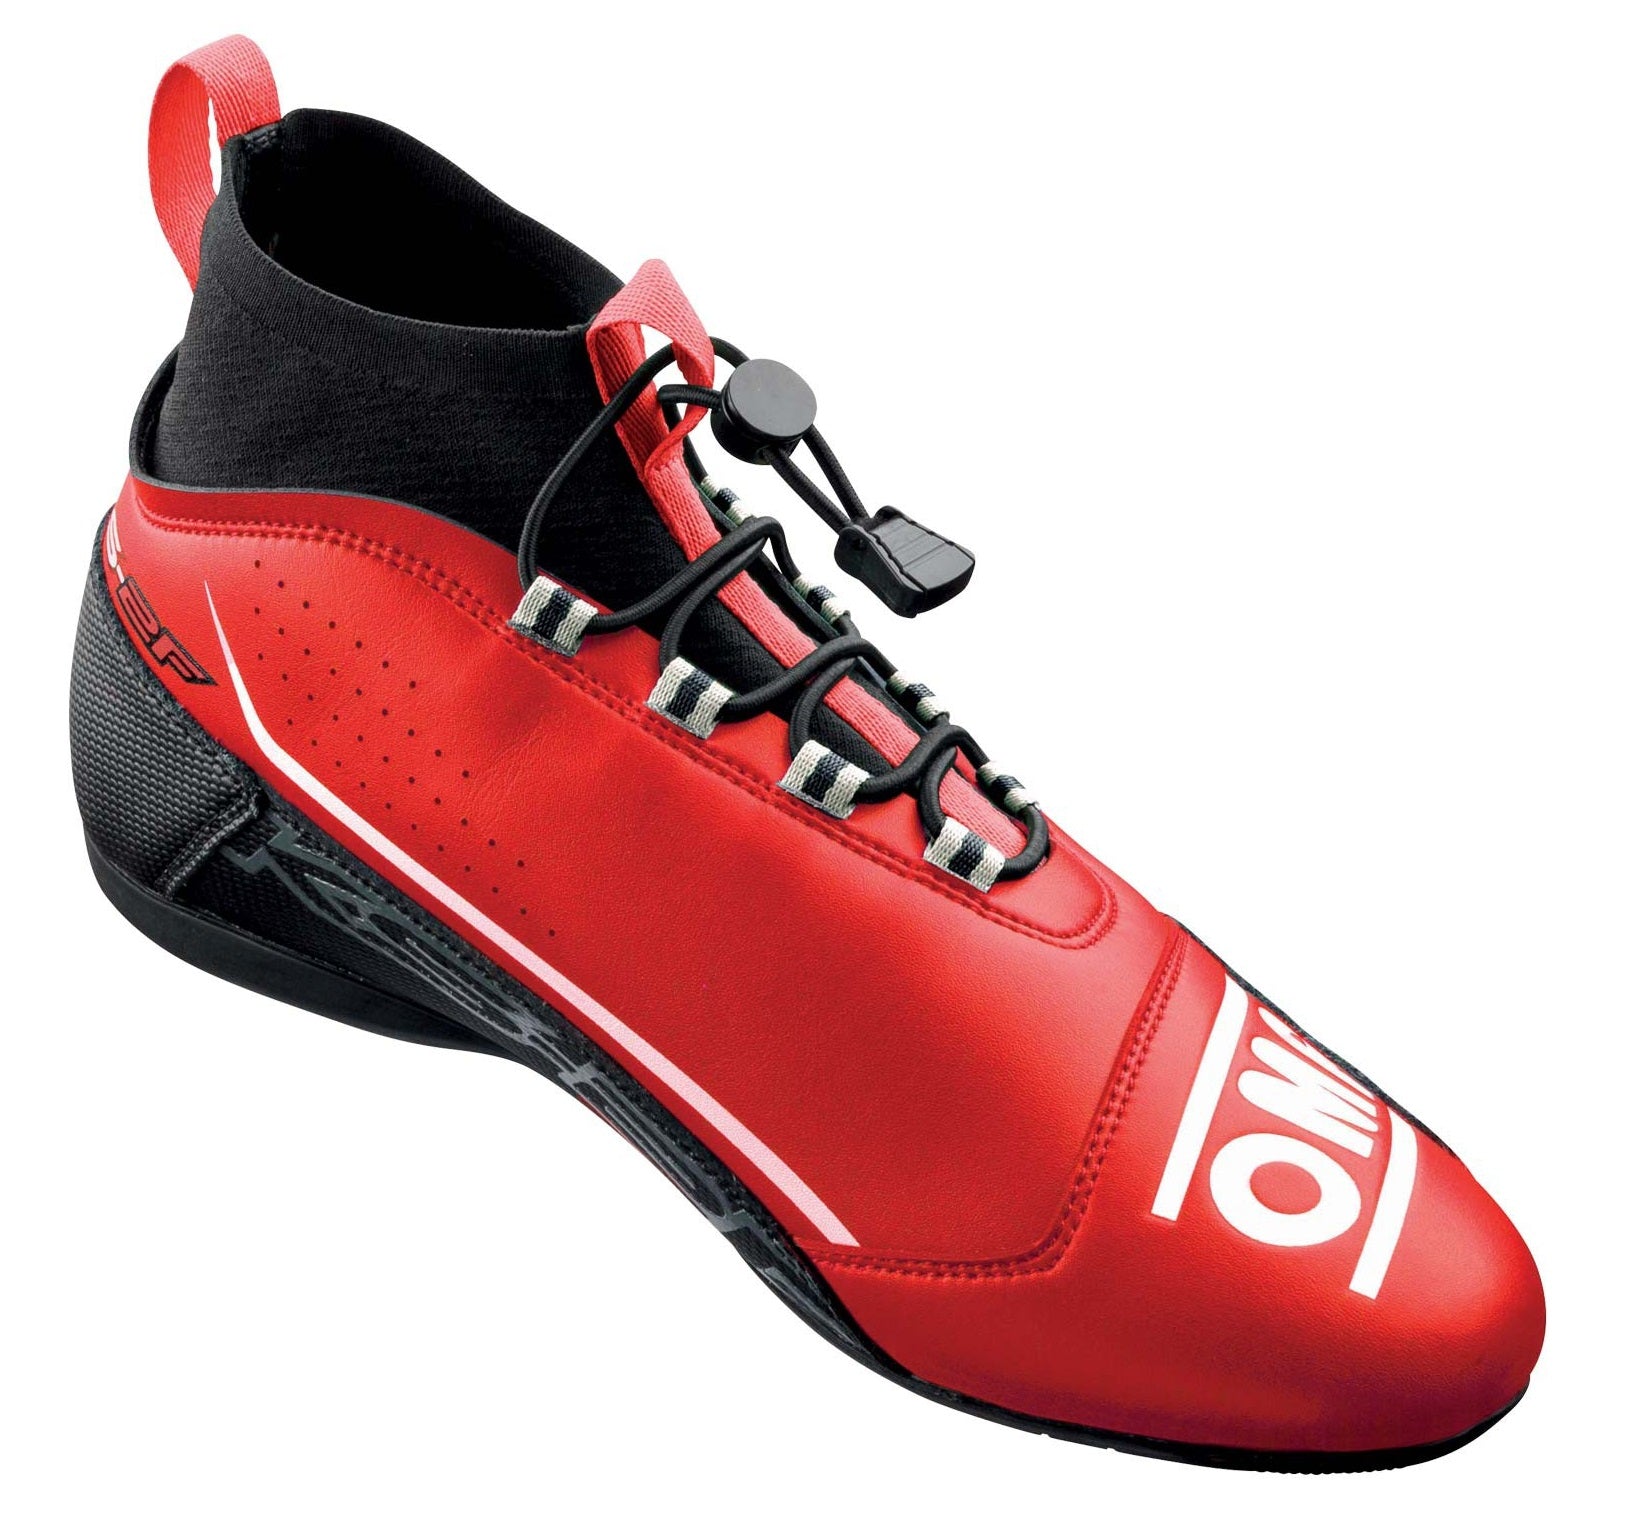 OMP KC0-0830-A01-060-32 KS-2F Karting shoes, children, red/black, size 32 Photo-1 